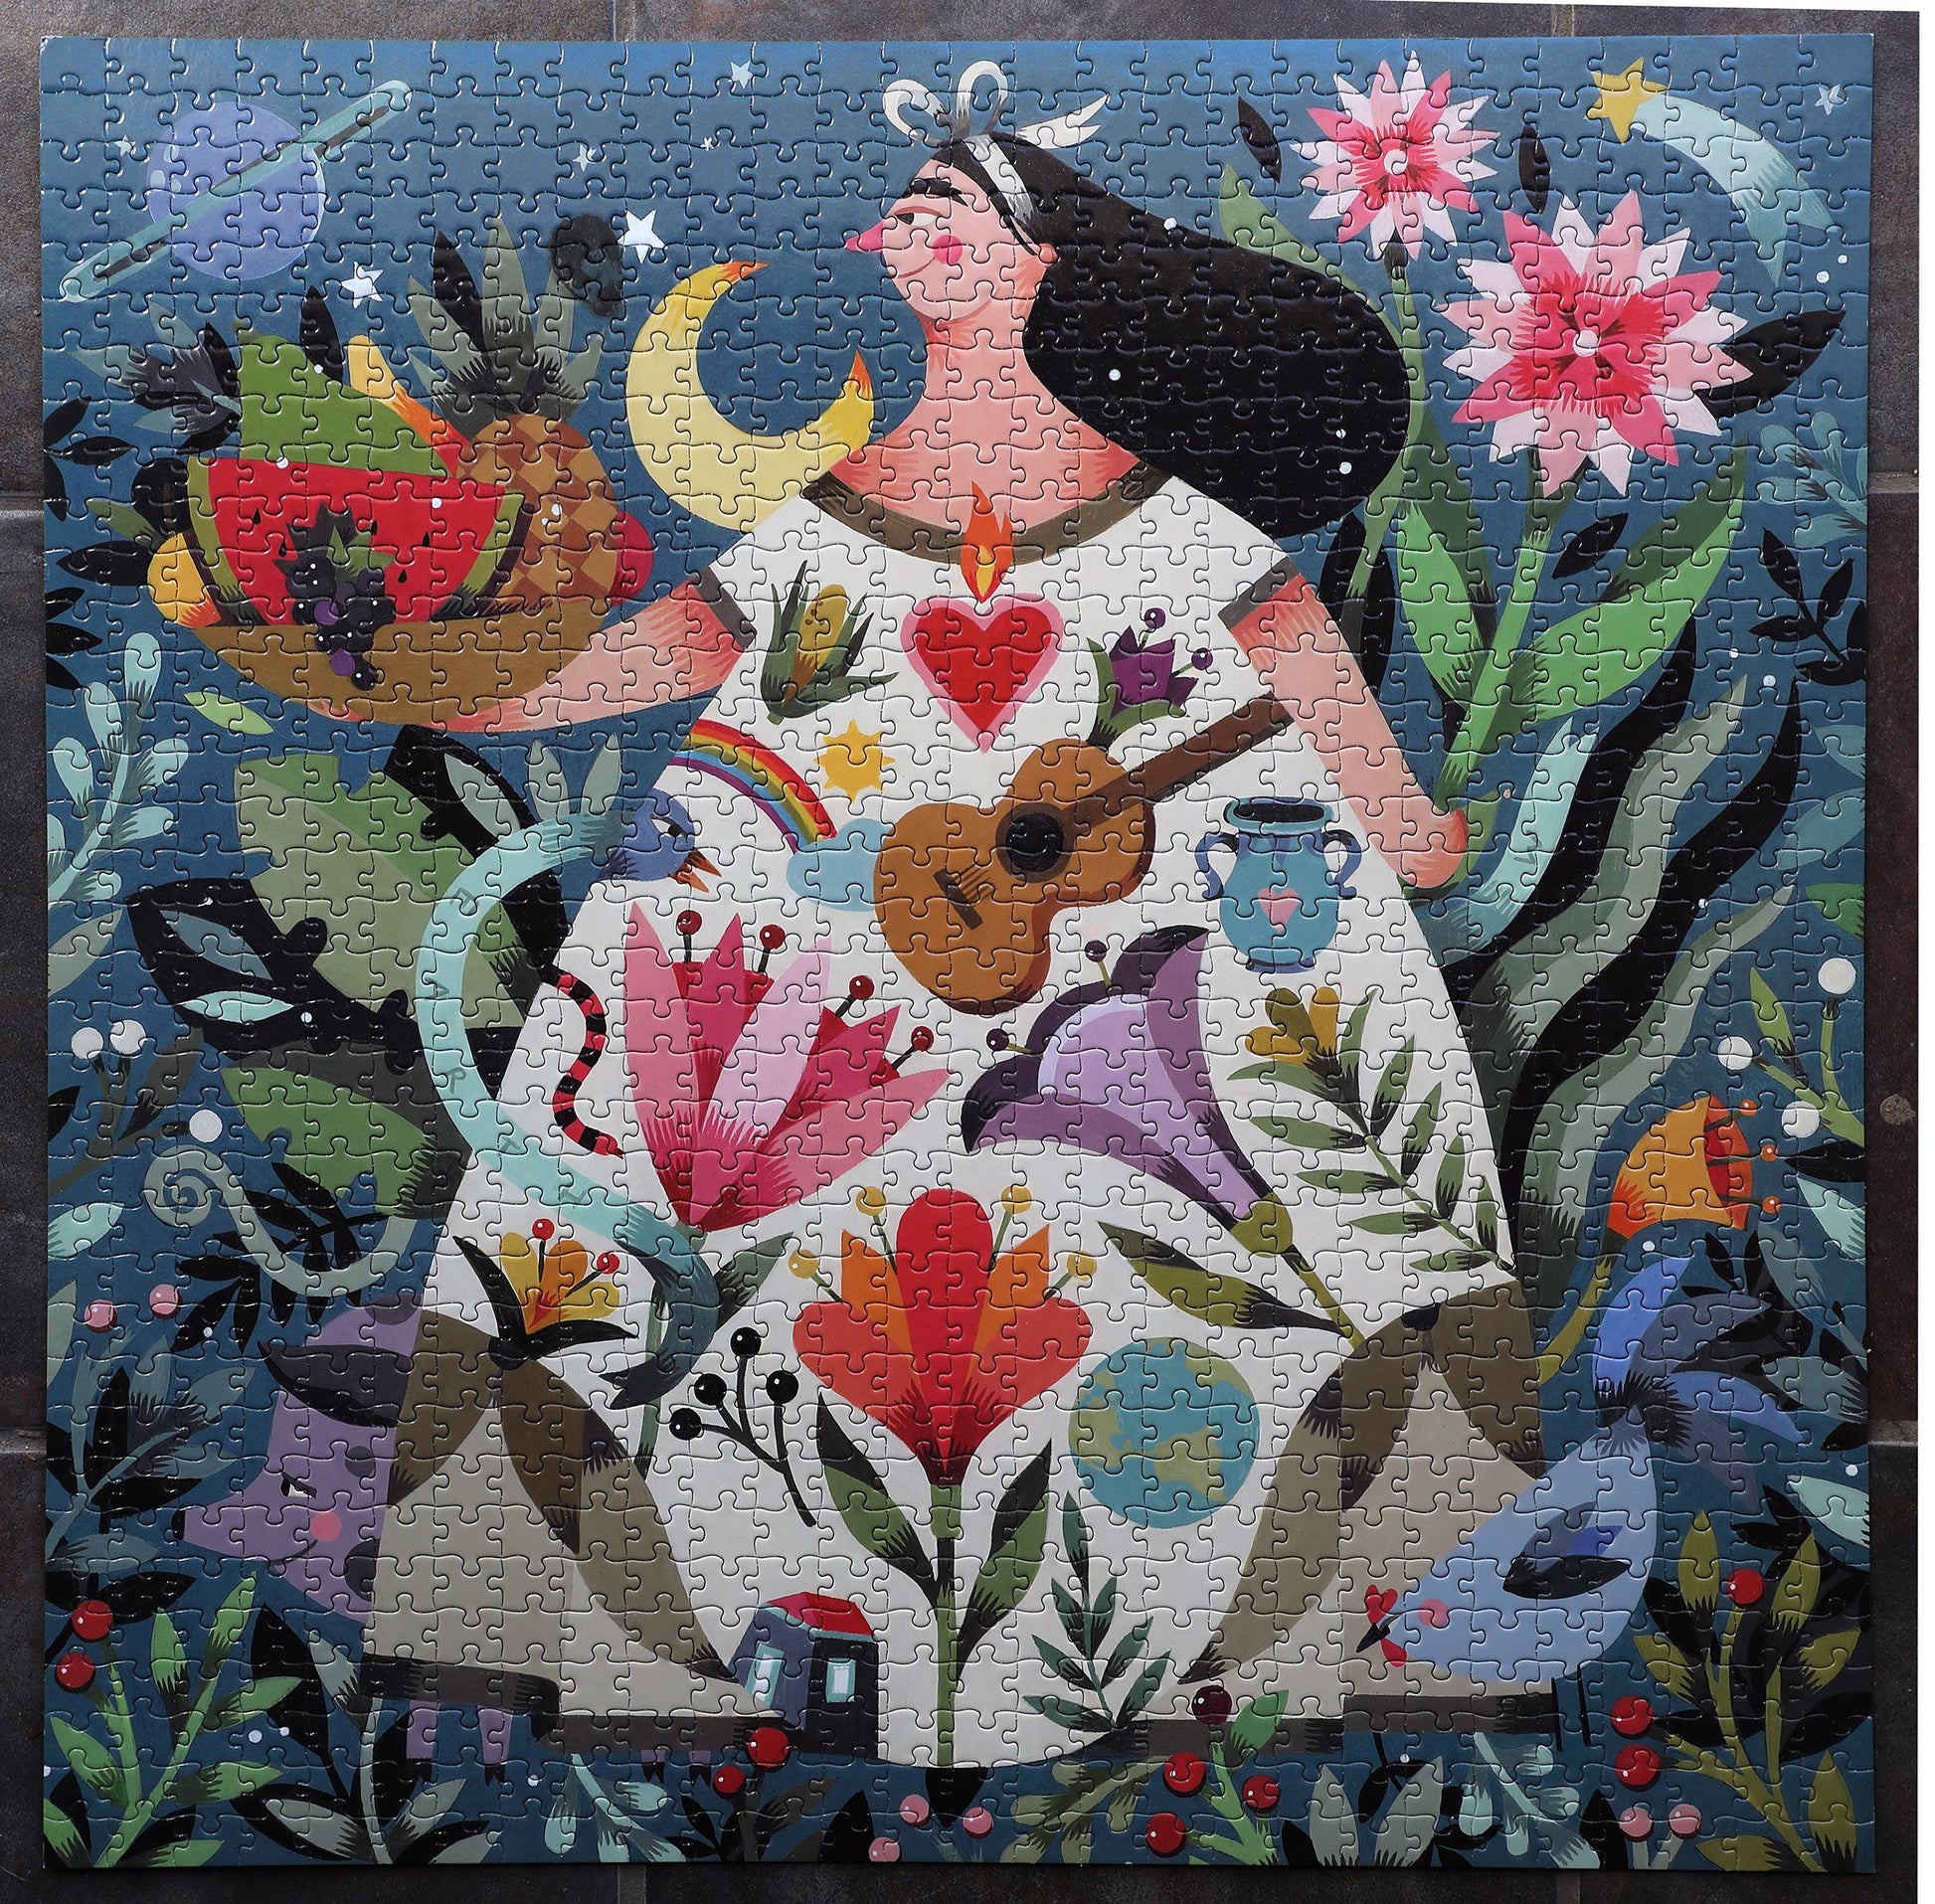 Mother Earth 1000 Piece Jigsaw Puzzle  eeBoo Piece & Love | Gifts for Mom Grandma Wife Women 